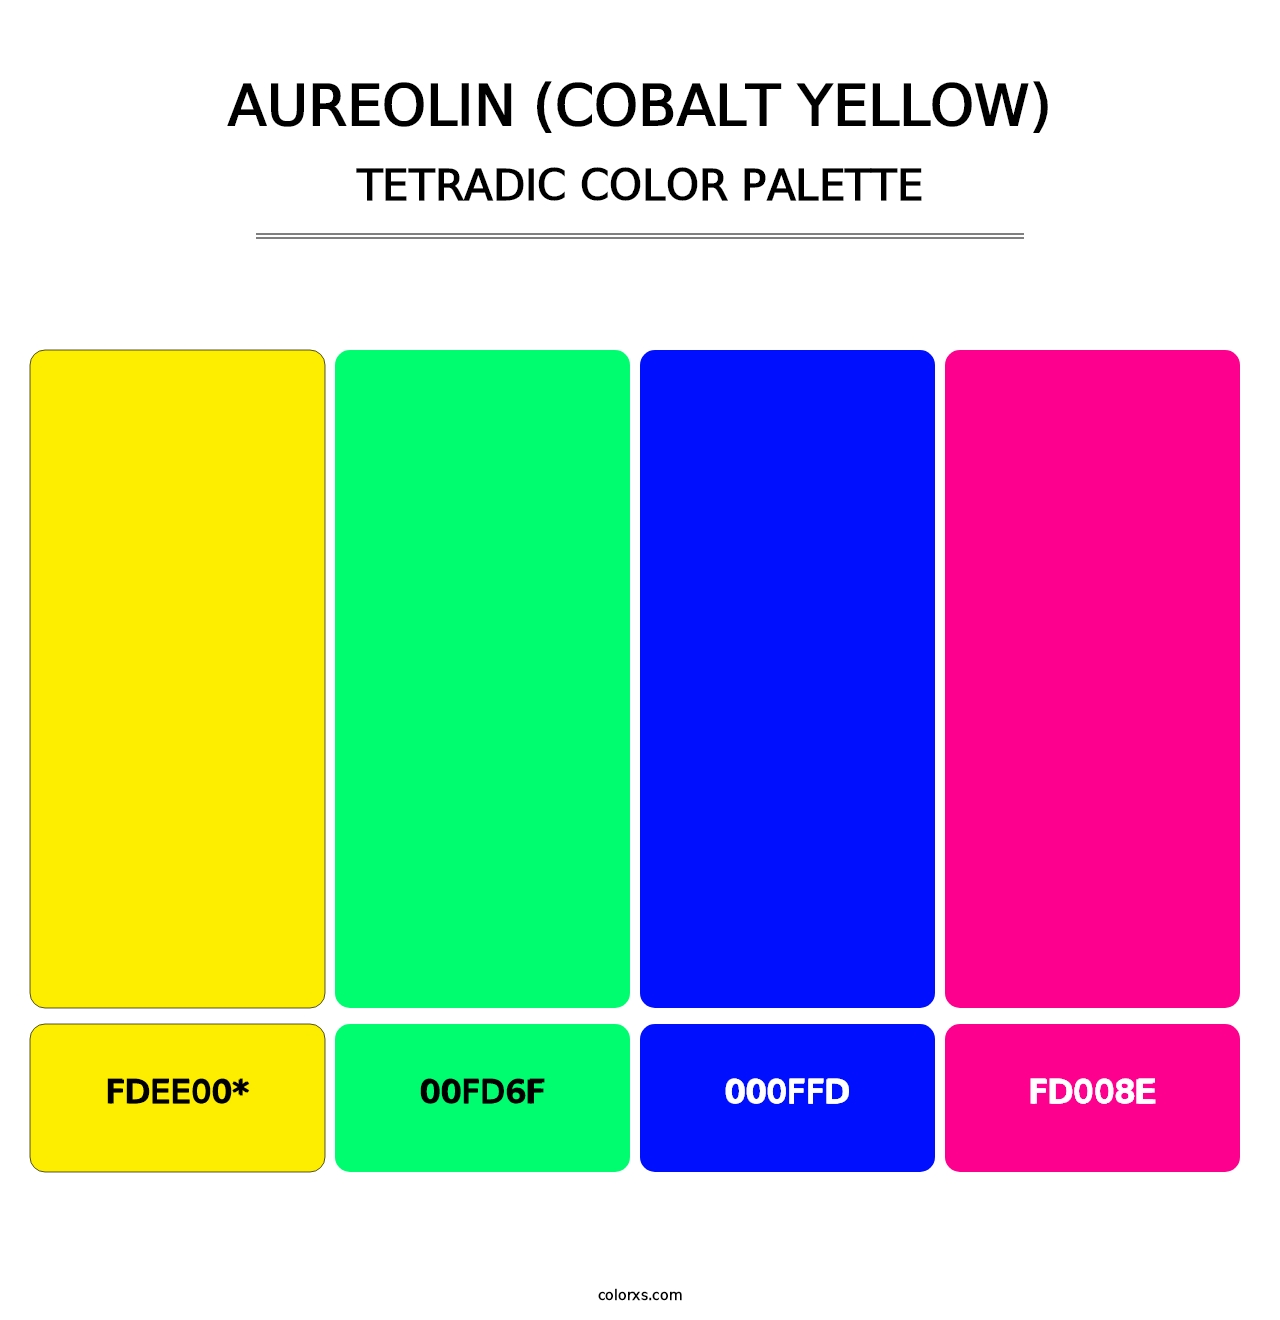 Aureolin (Cobalt Yellow) - Tetradic Color Palette